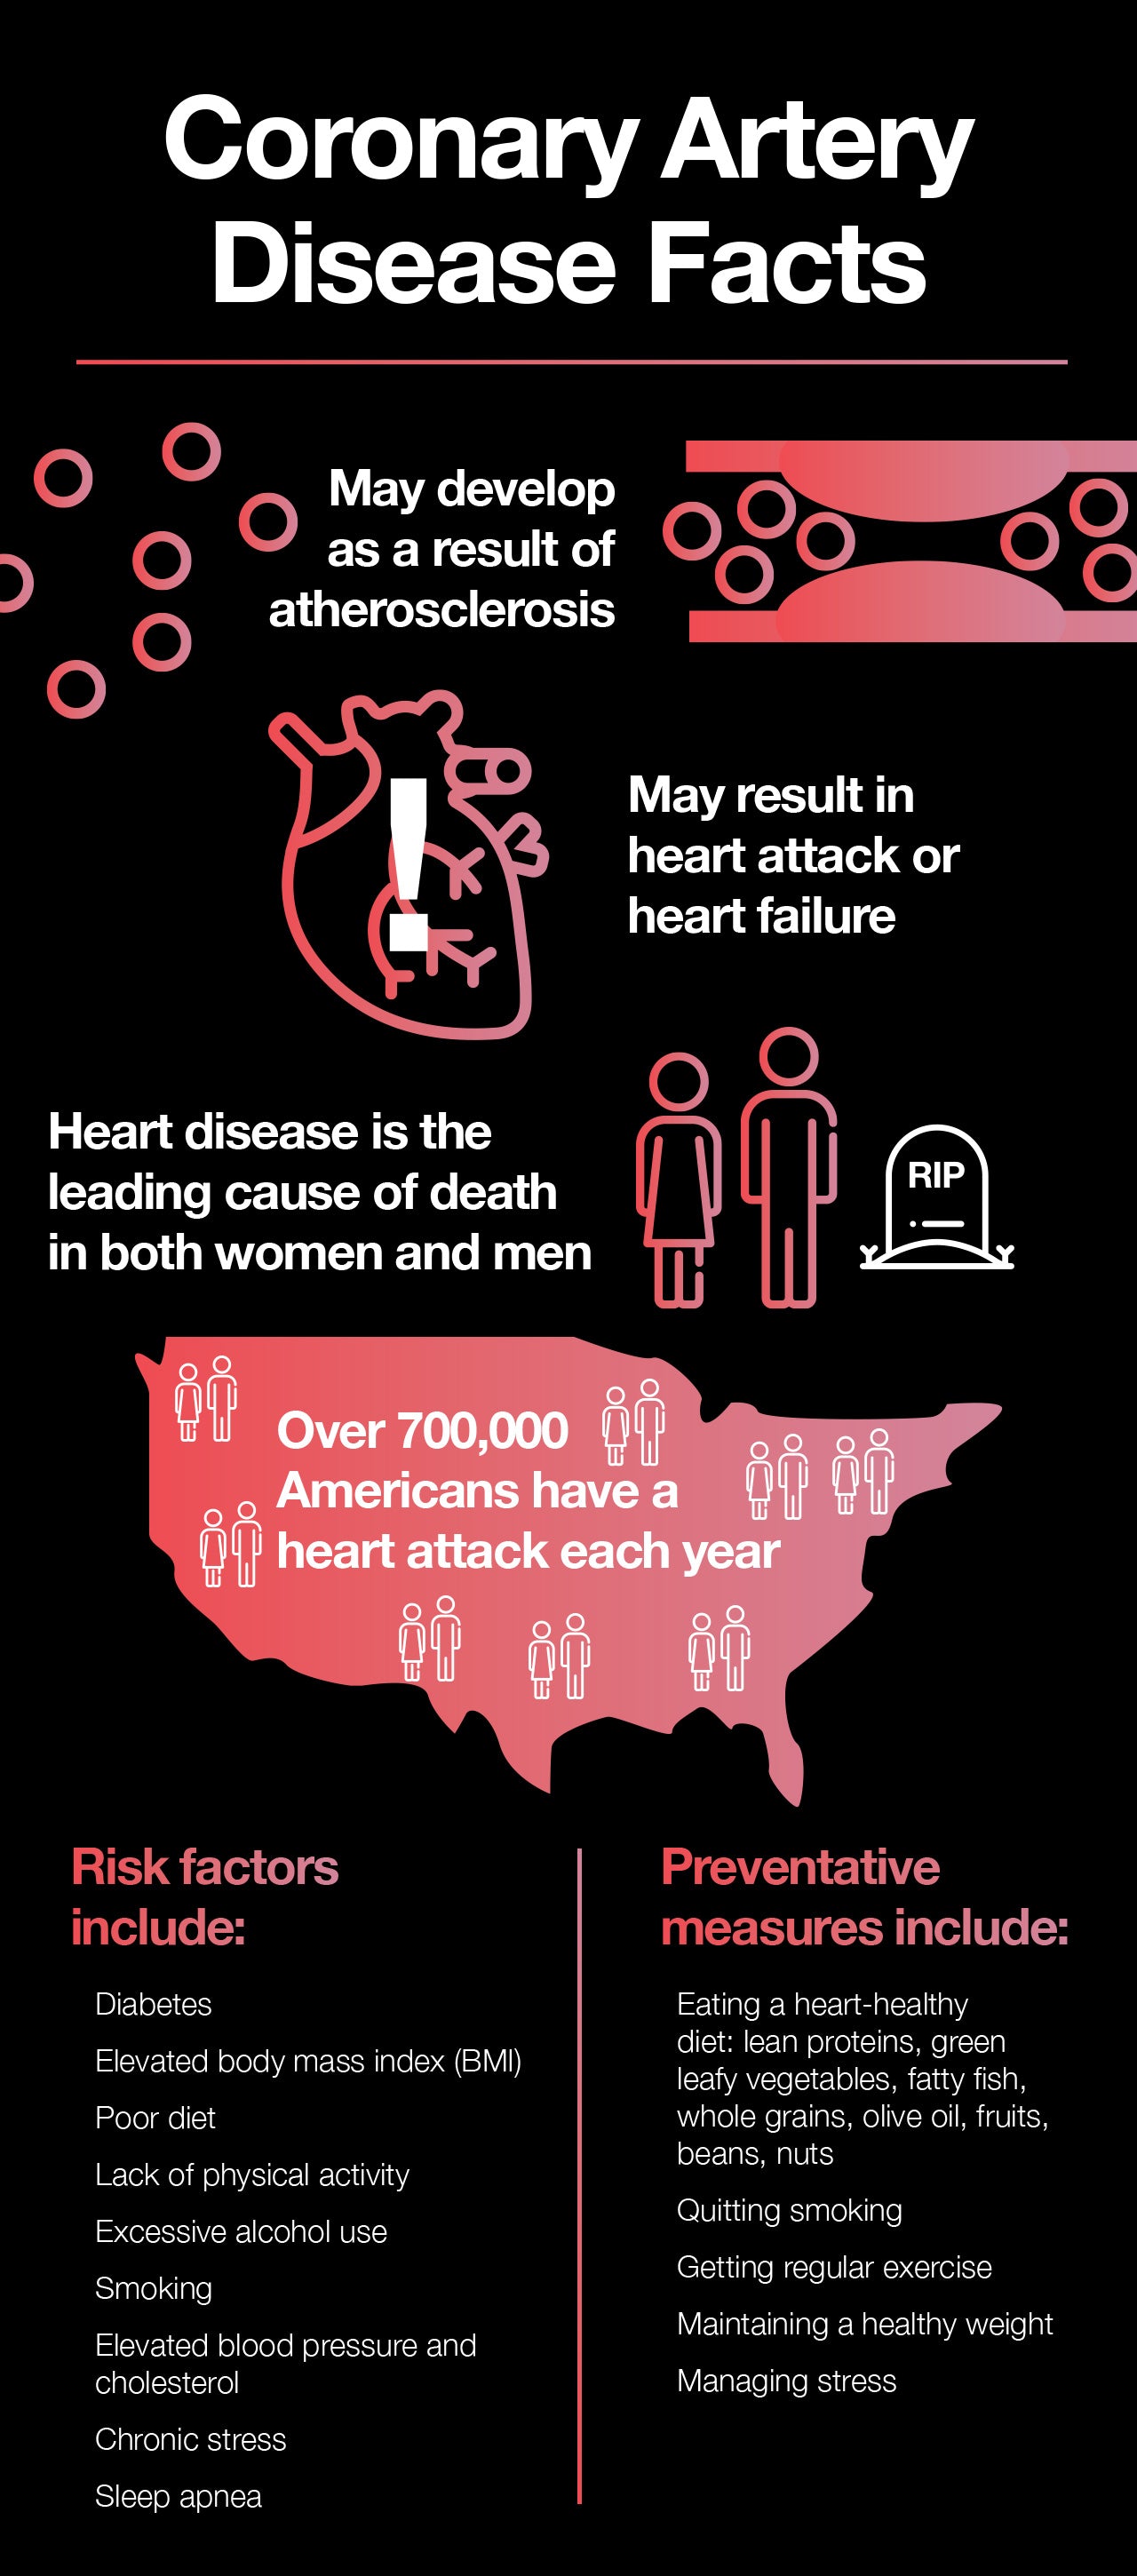 Coronary artery disease facts